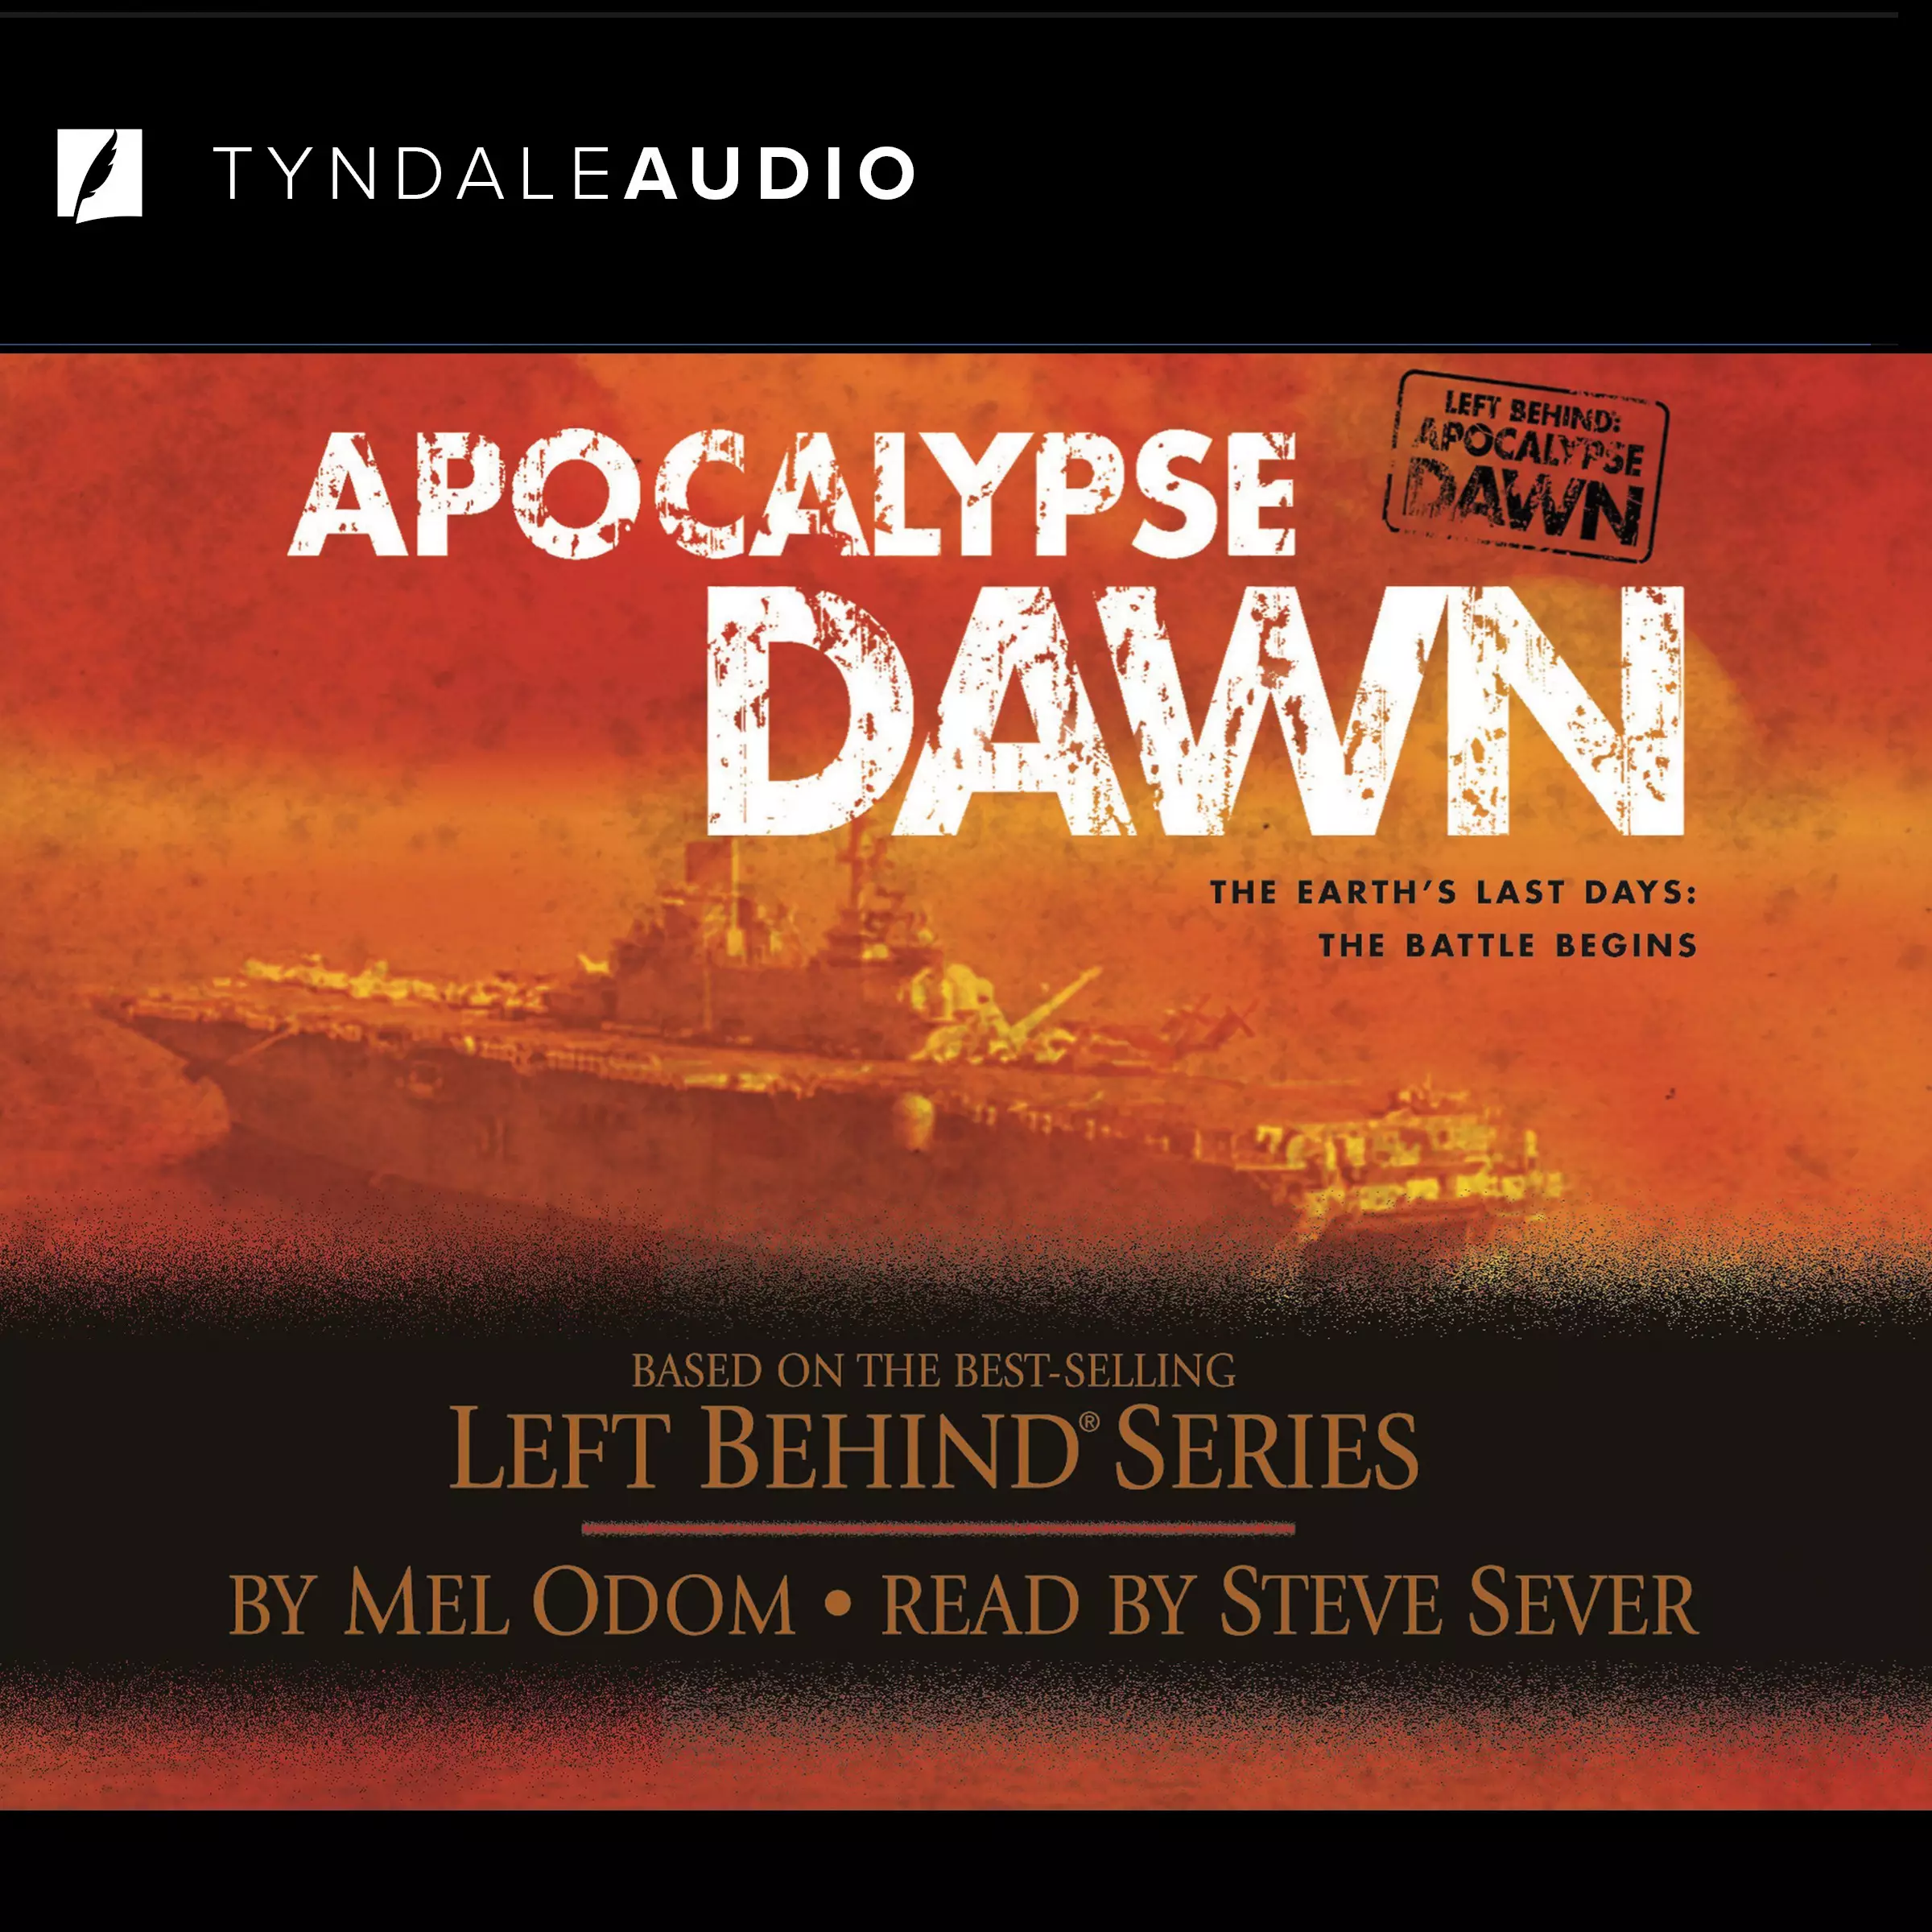 Apocalypse Dawn